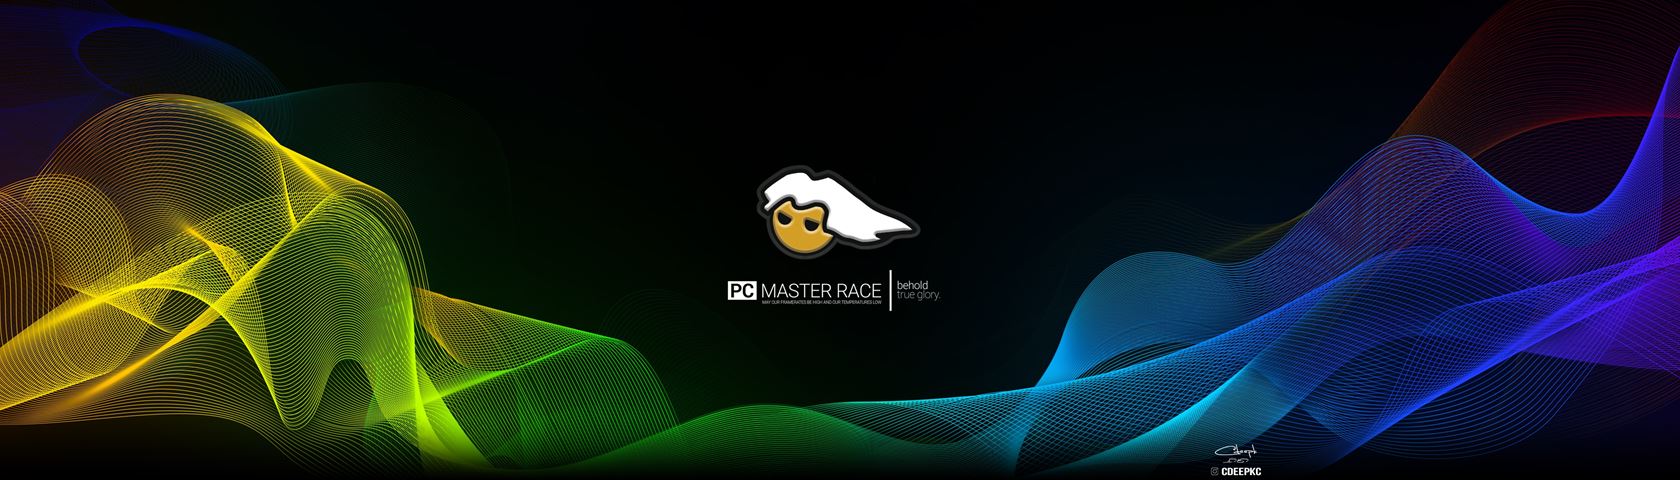 Project "PC Master Race" Valerie